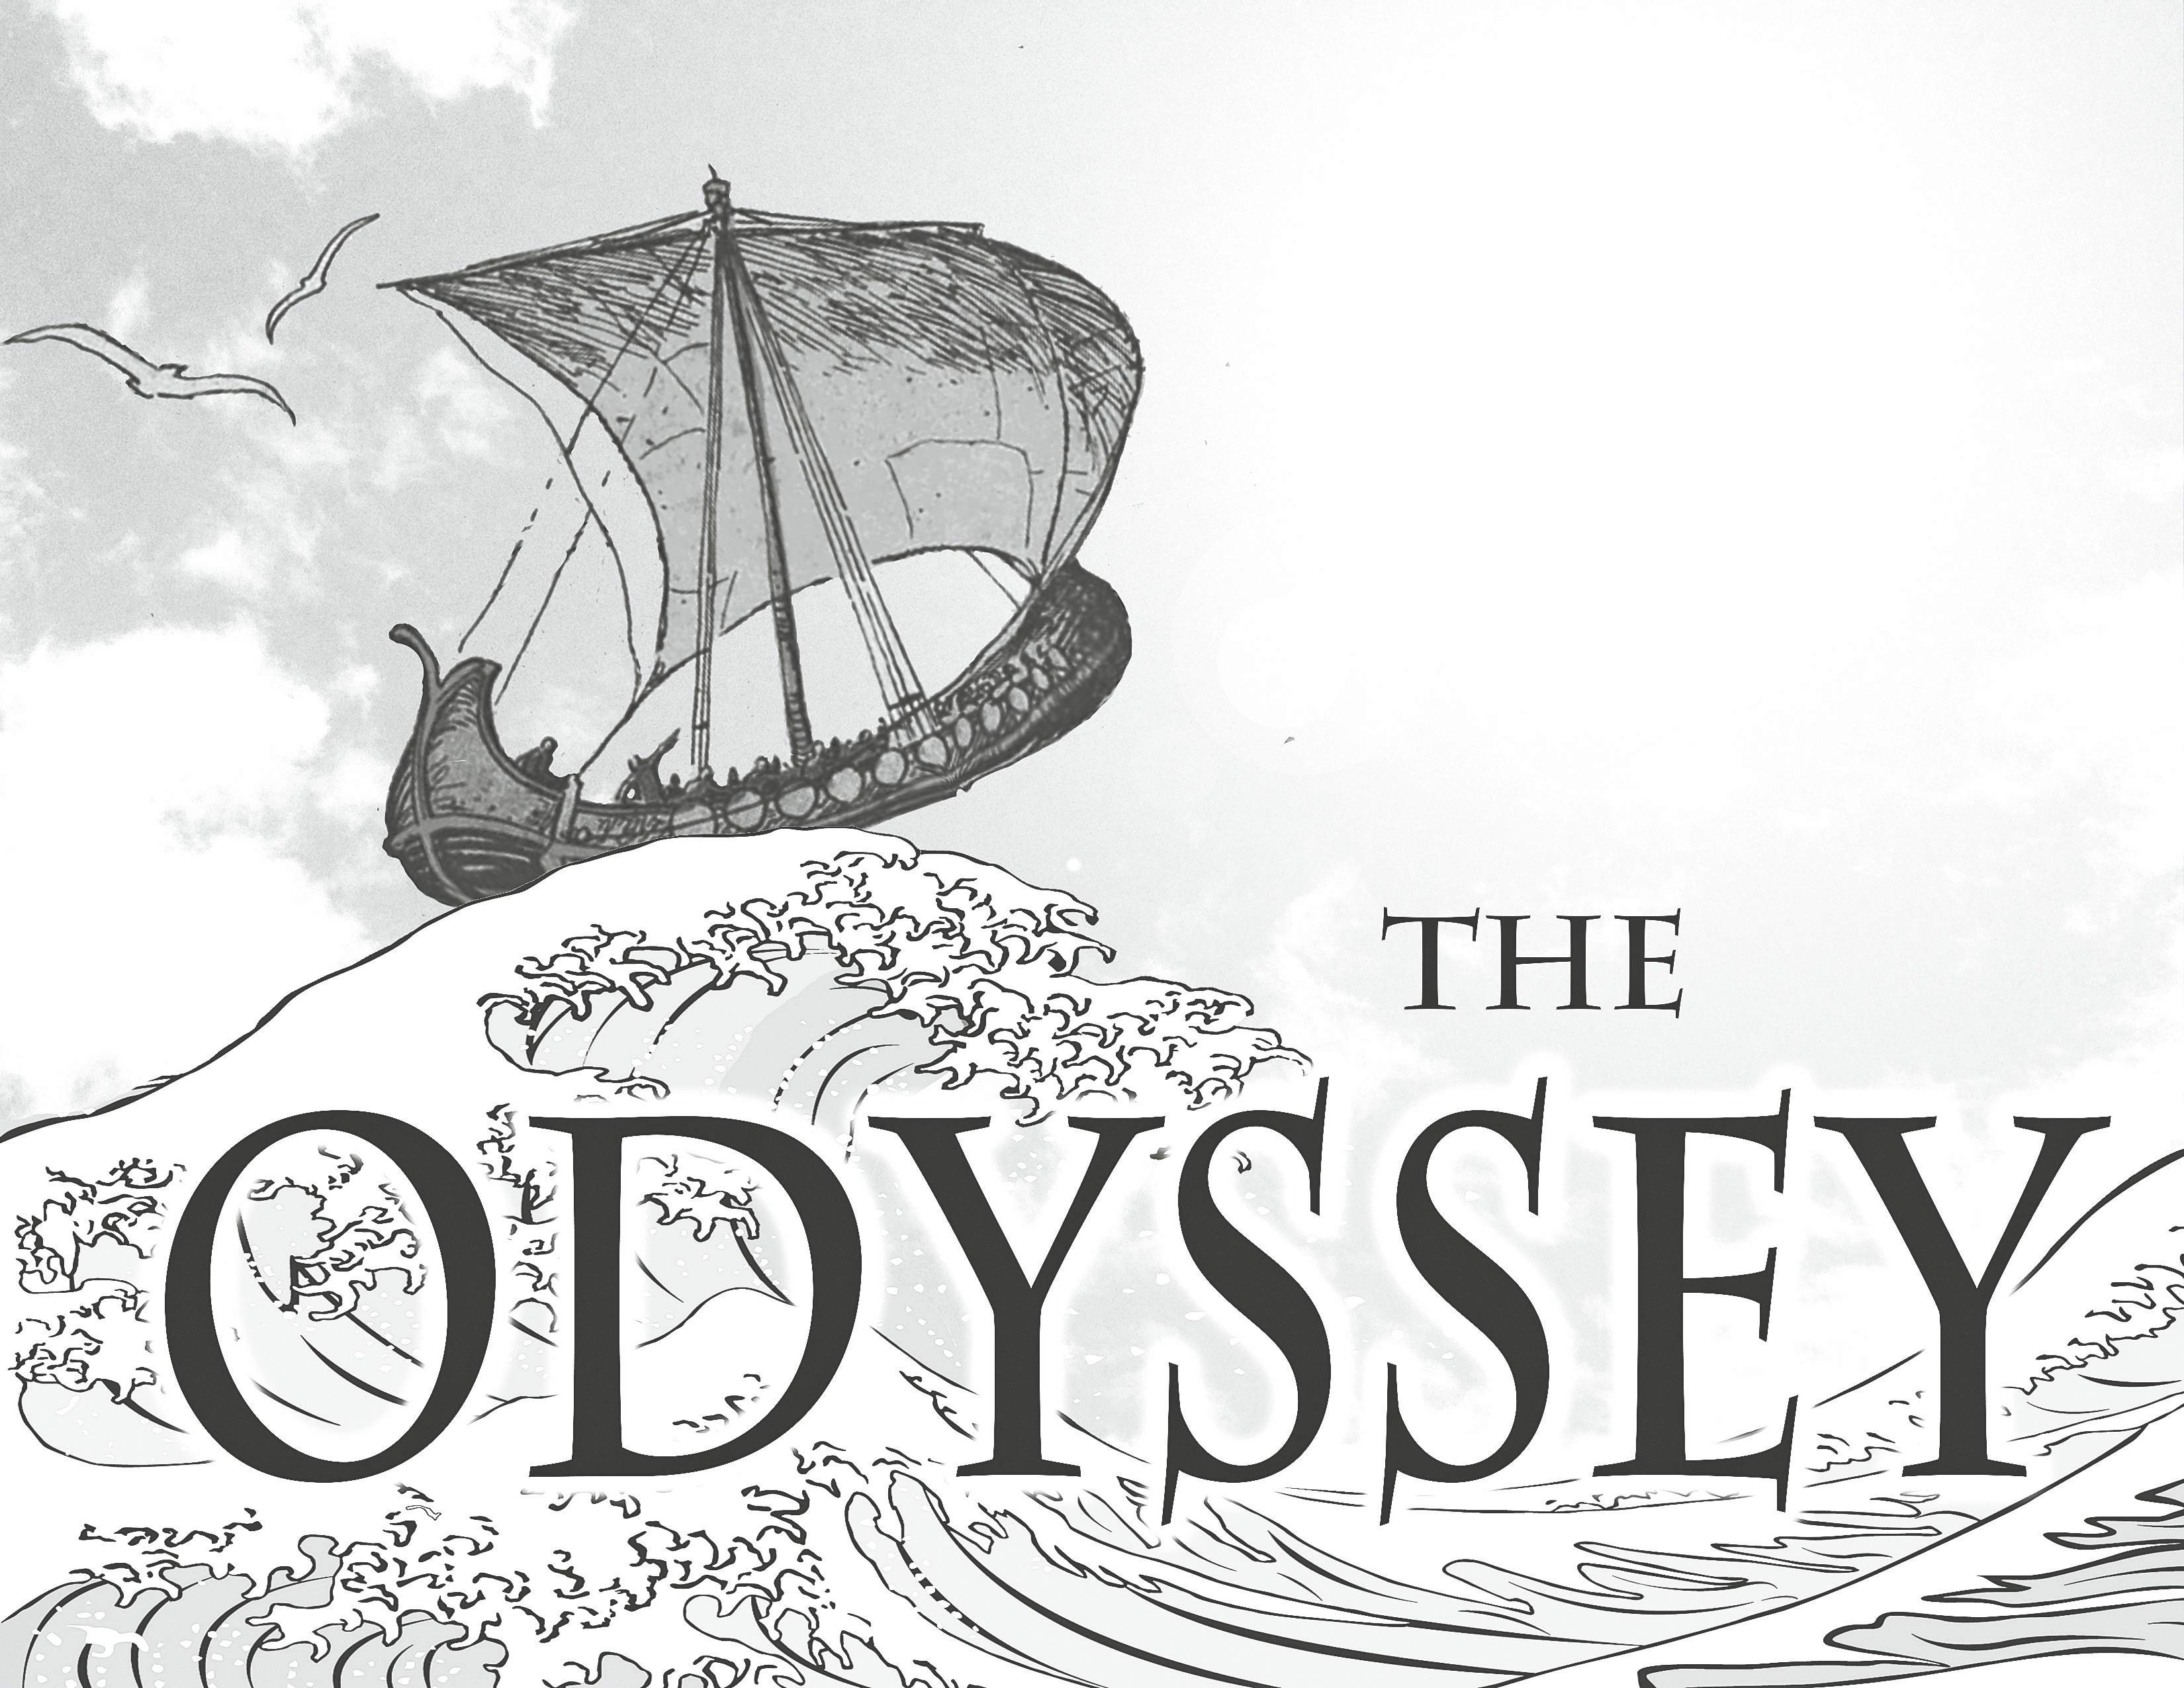 The Odyssey on emaze